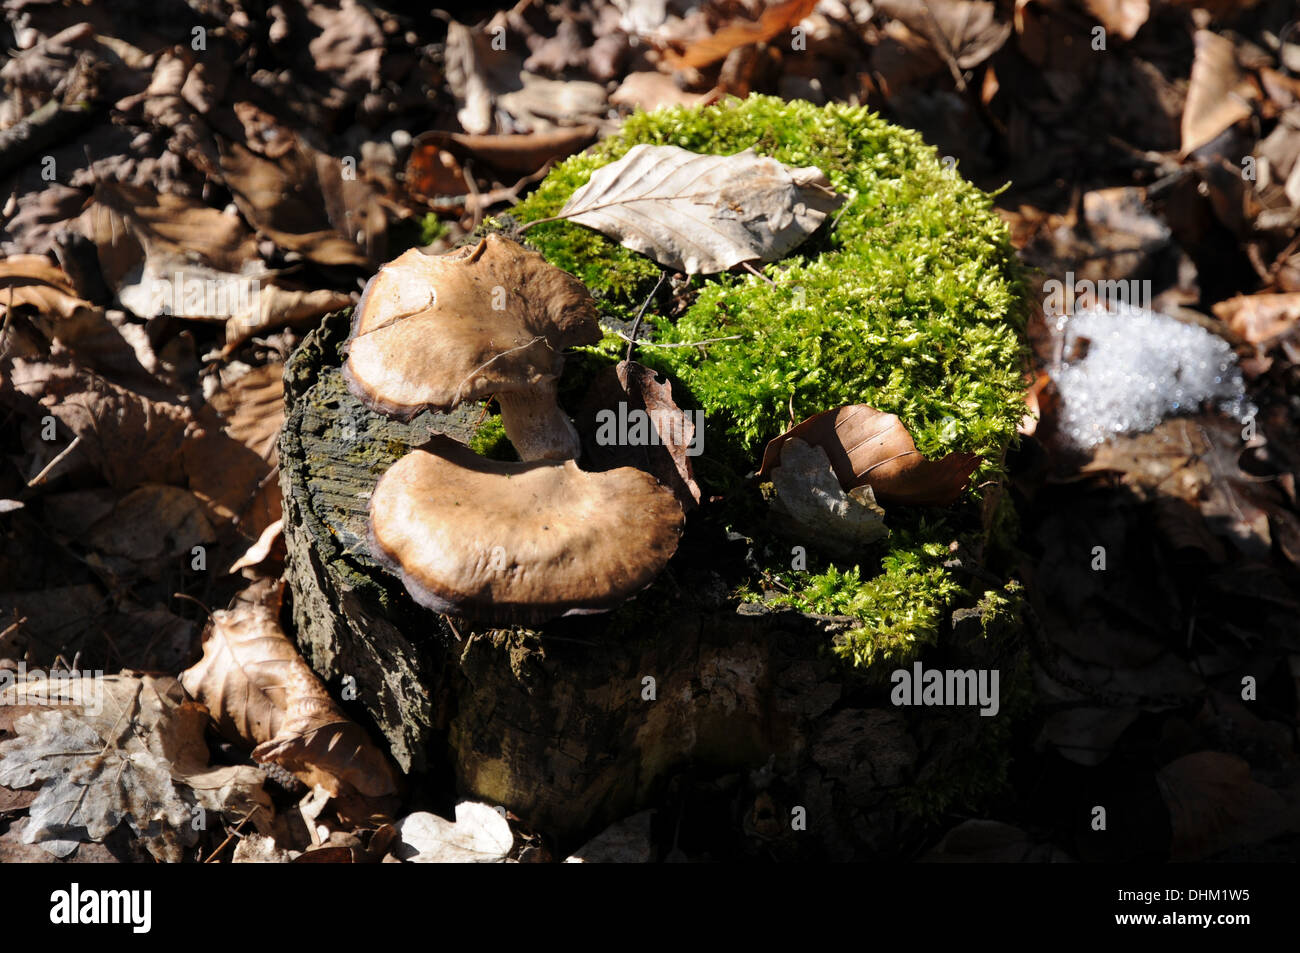 Treestump with mushrooms and moss Stock Photo